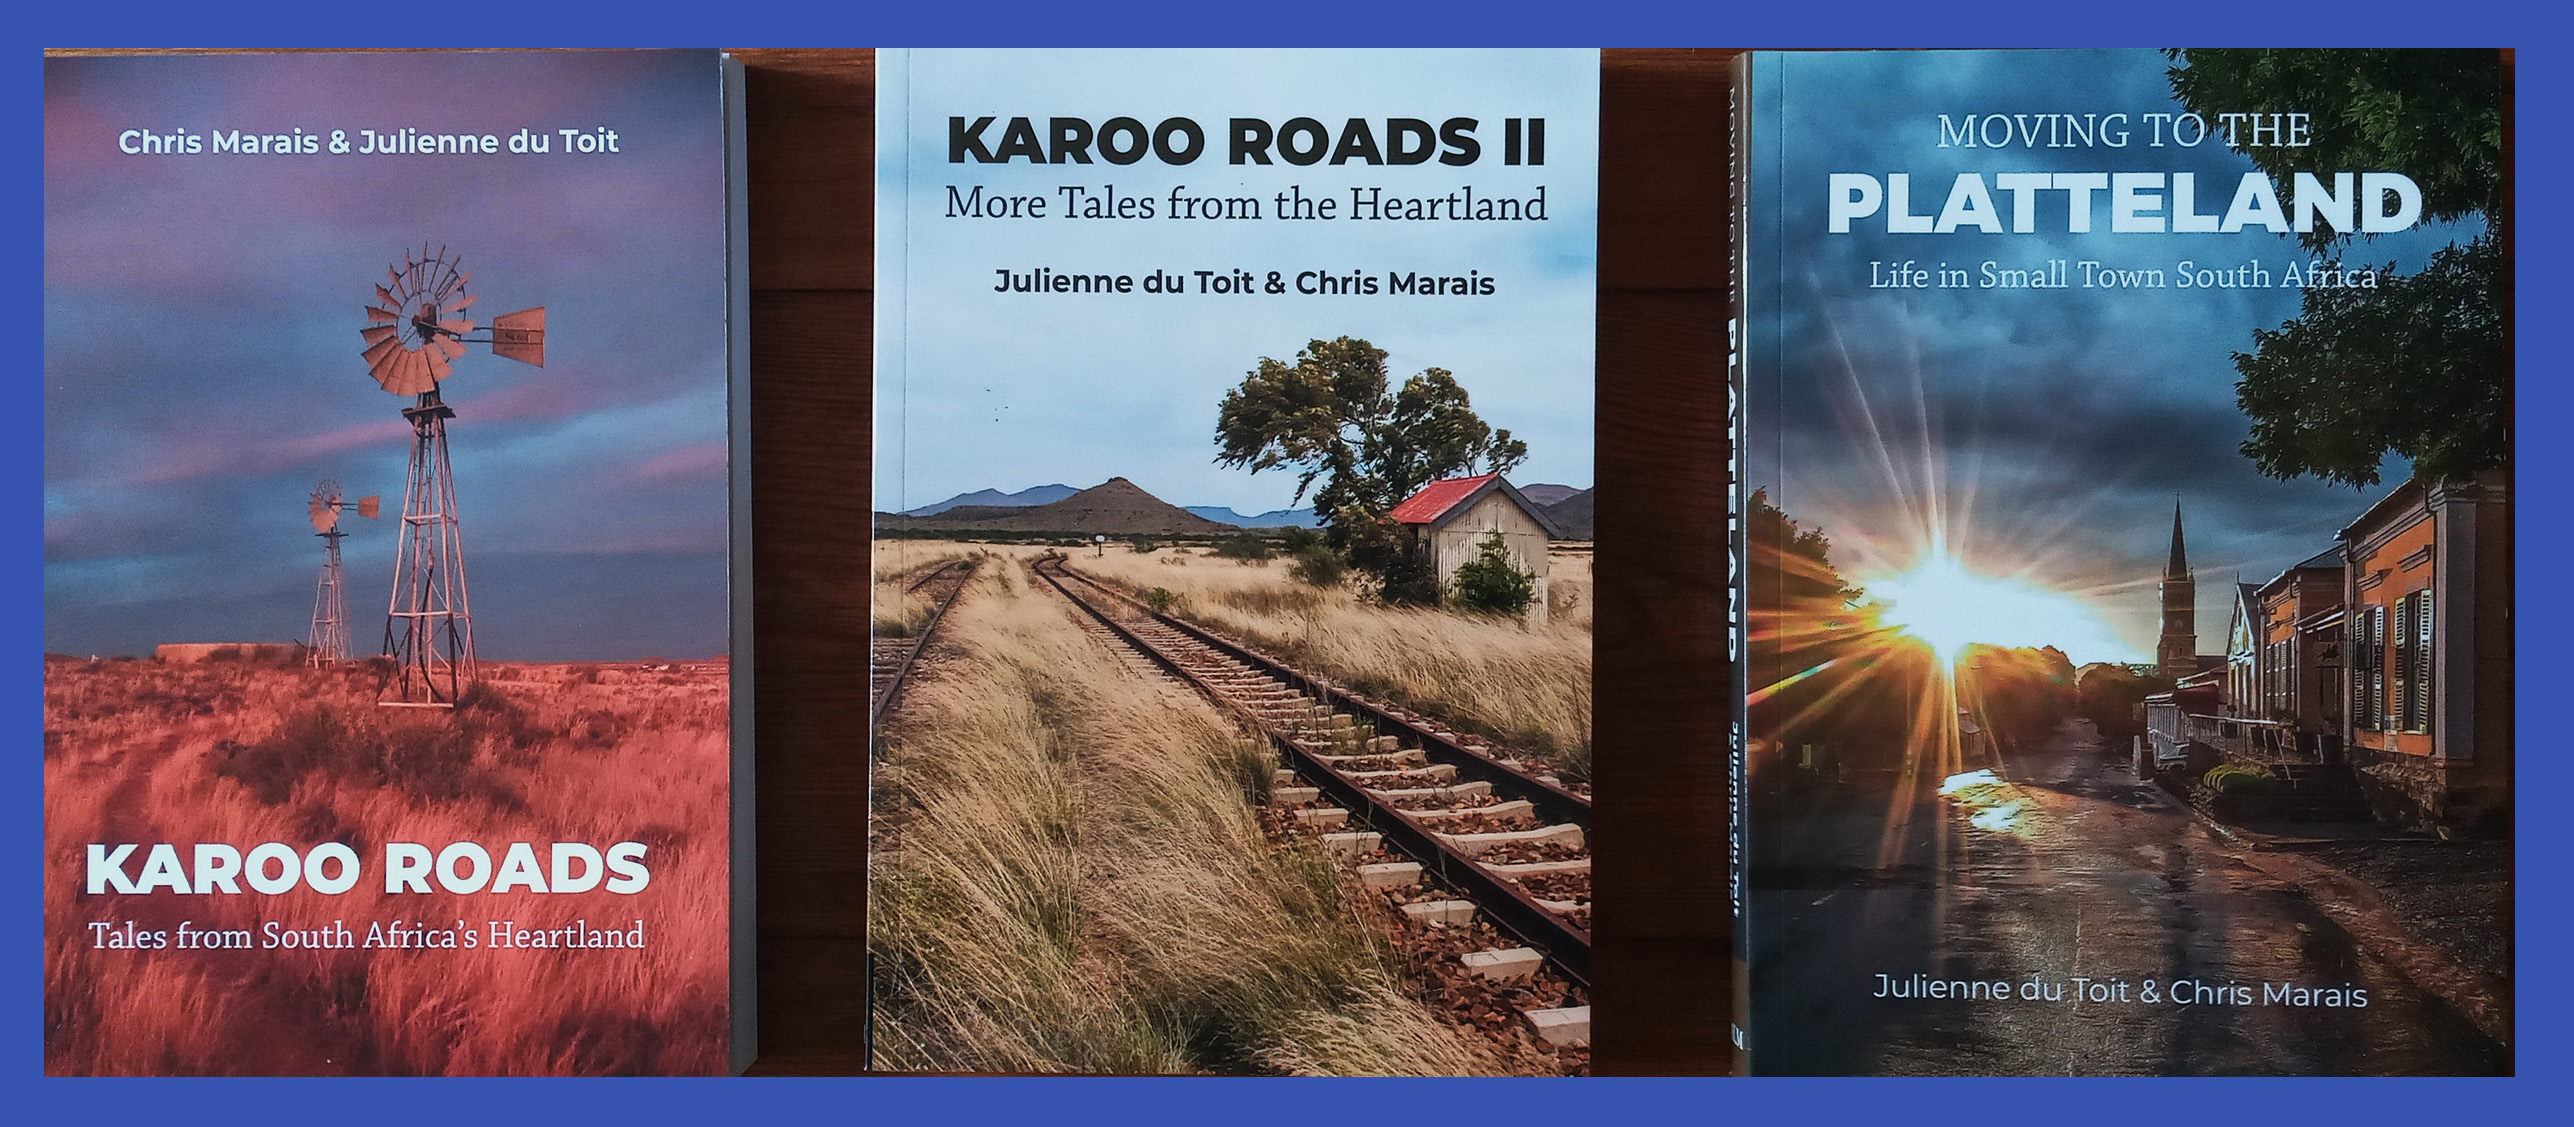 "Karoo Roads", "Karoo silnice II" jiný "Přesun do Plattelandu" autor: Chris Marais a Julienne du Toit obálky knih.